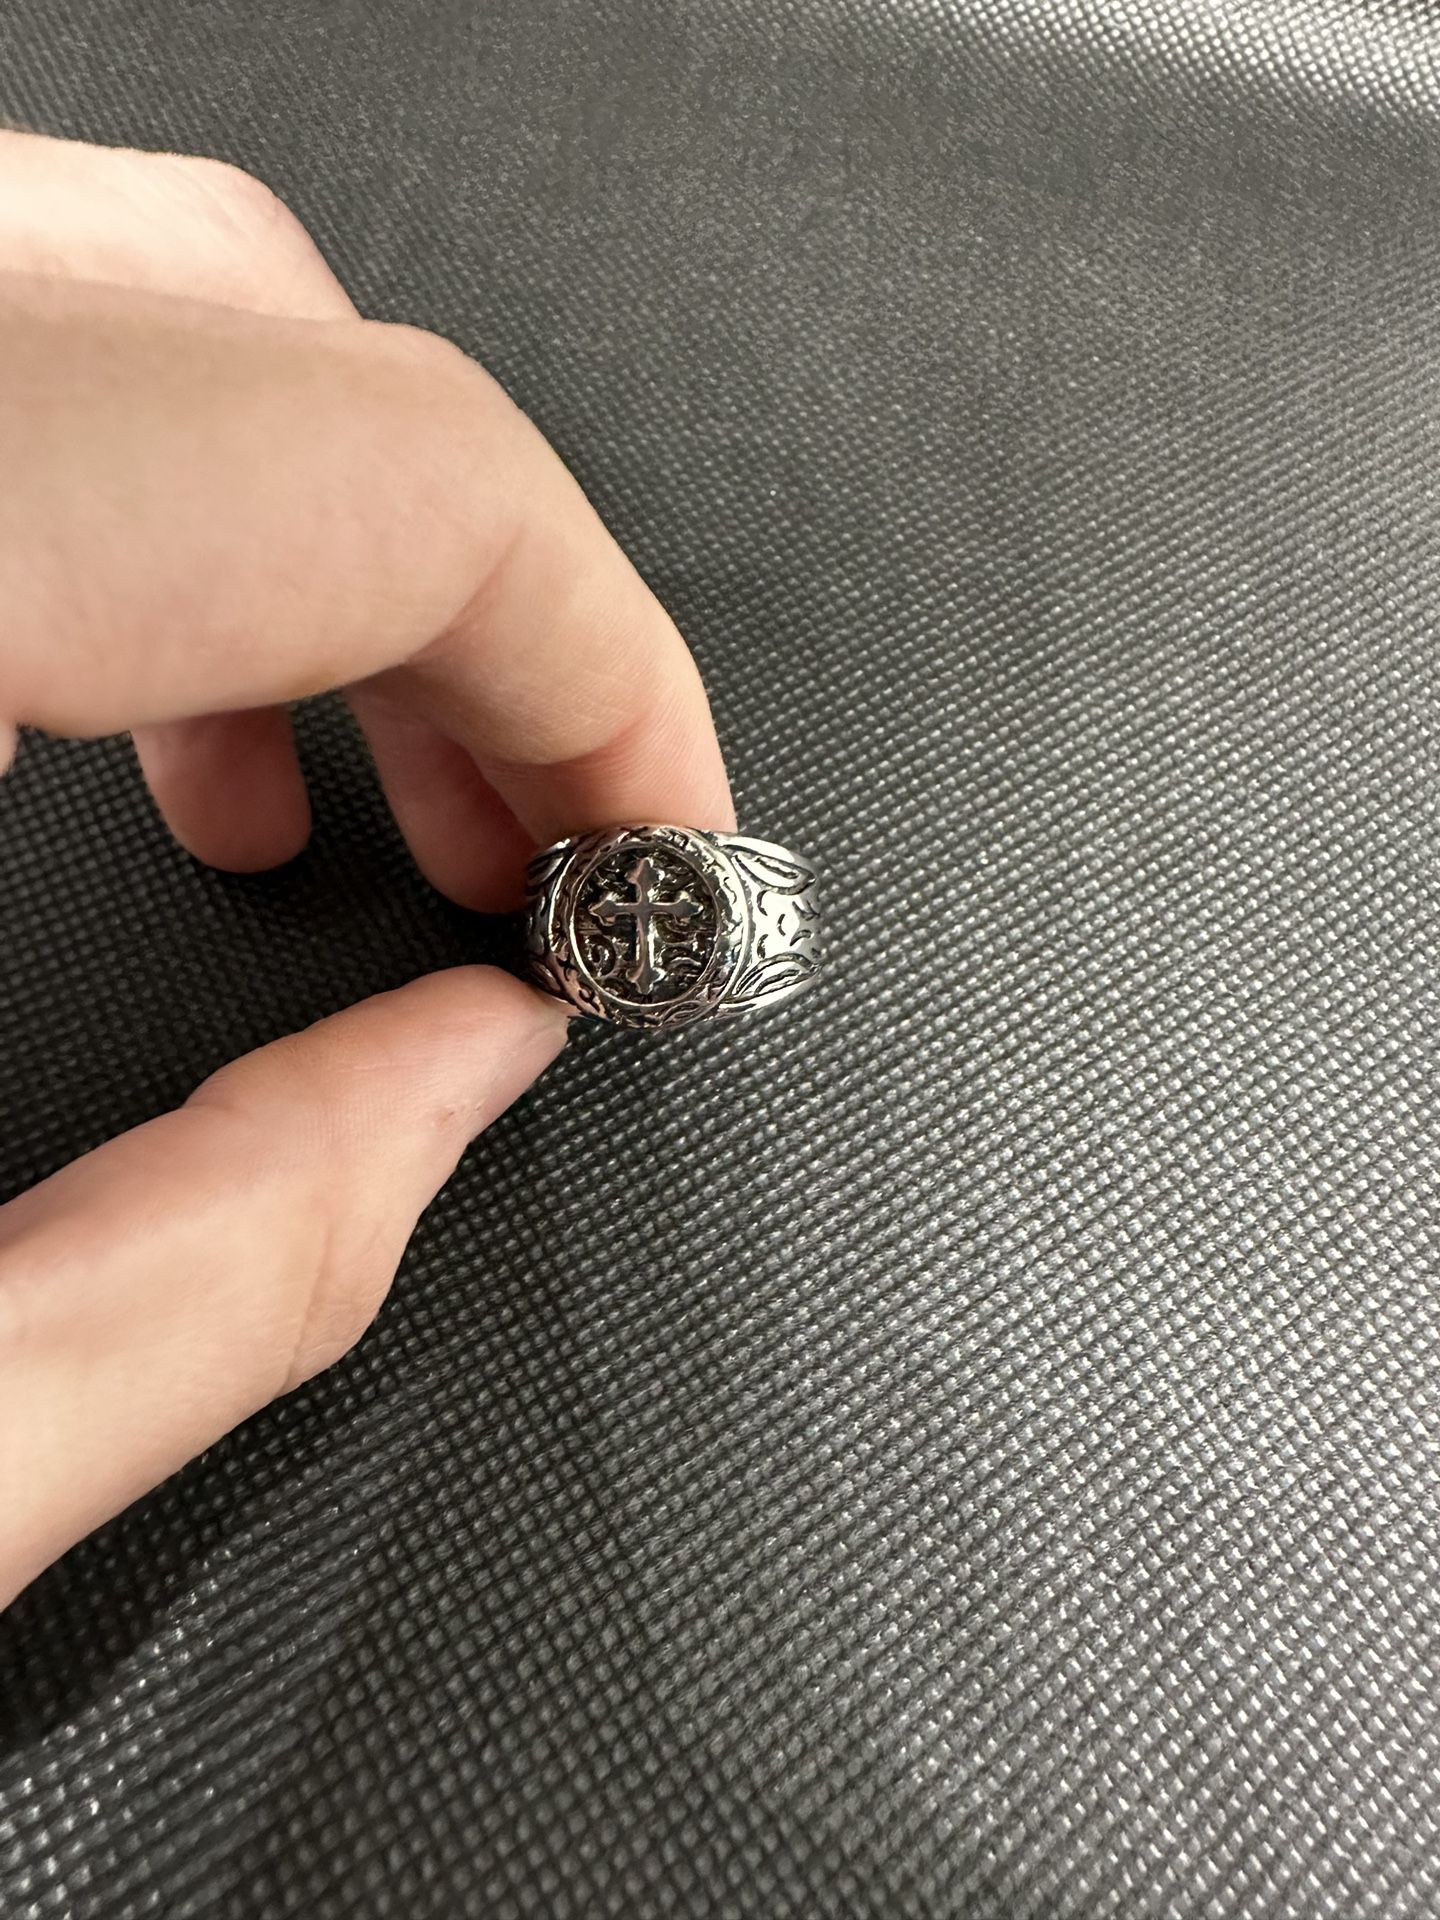 Silver “Vintage” Cross Ring - Adjustable Size 